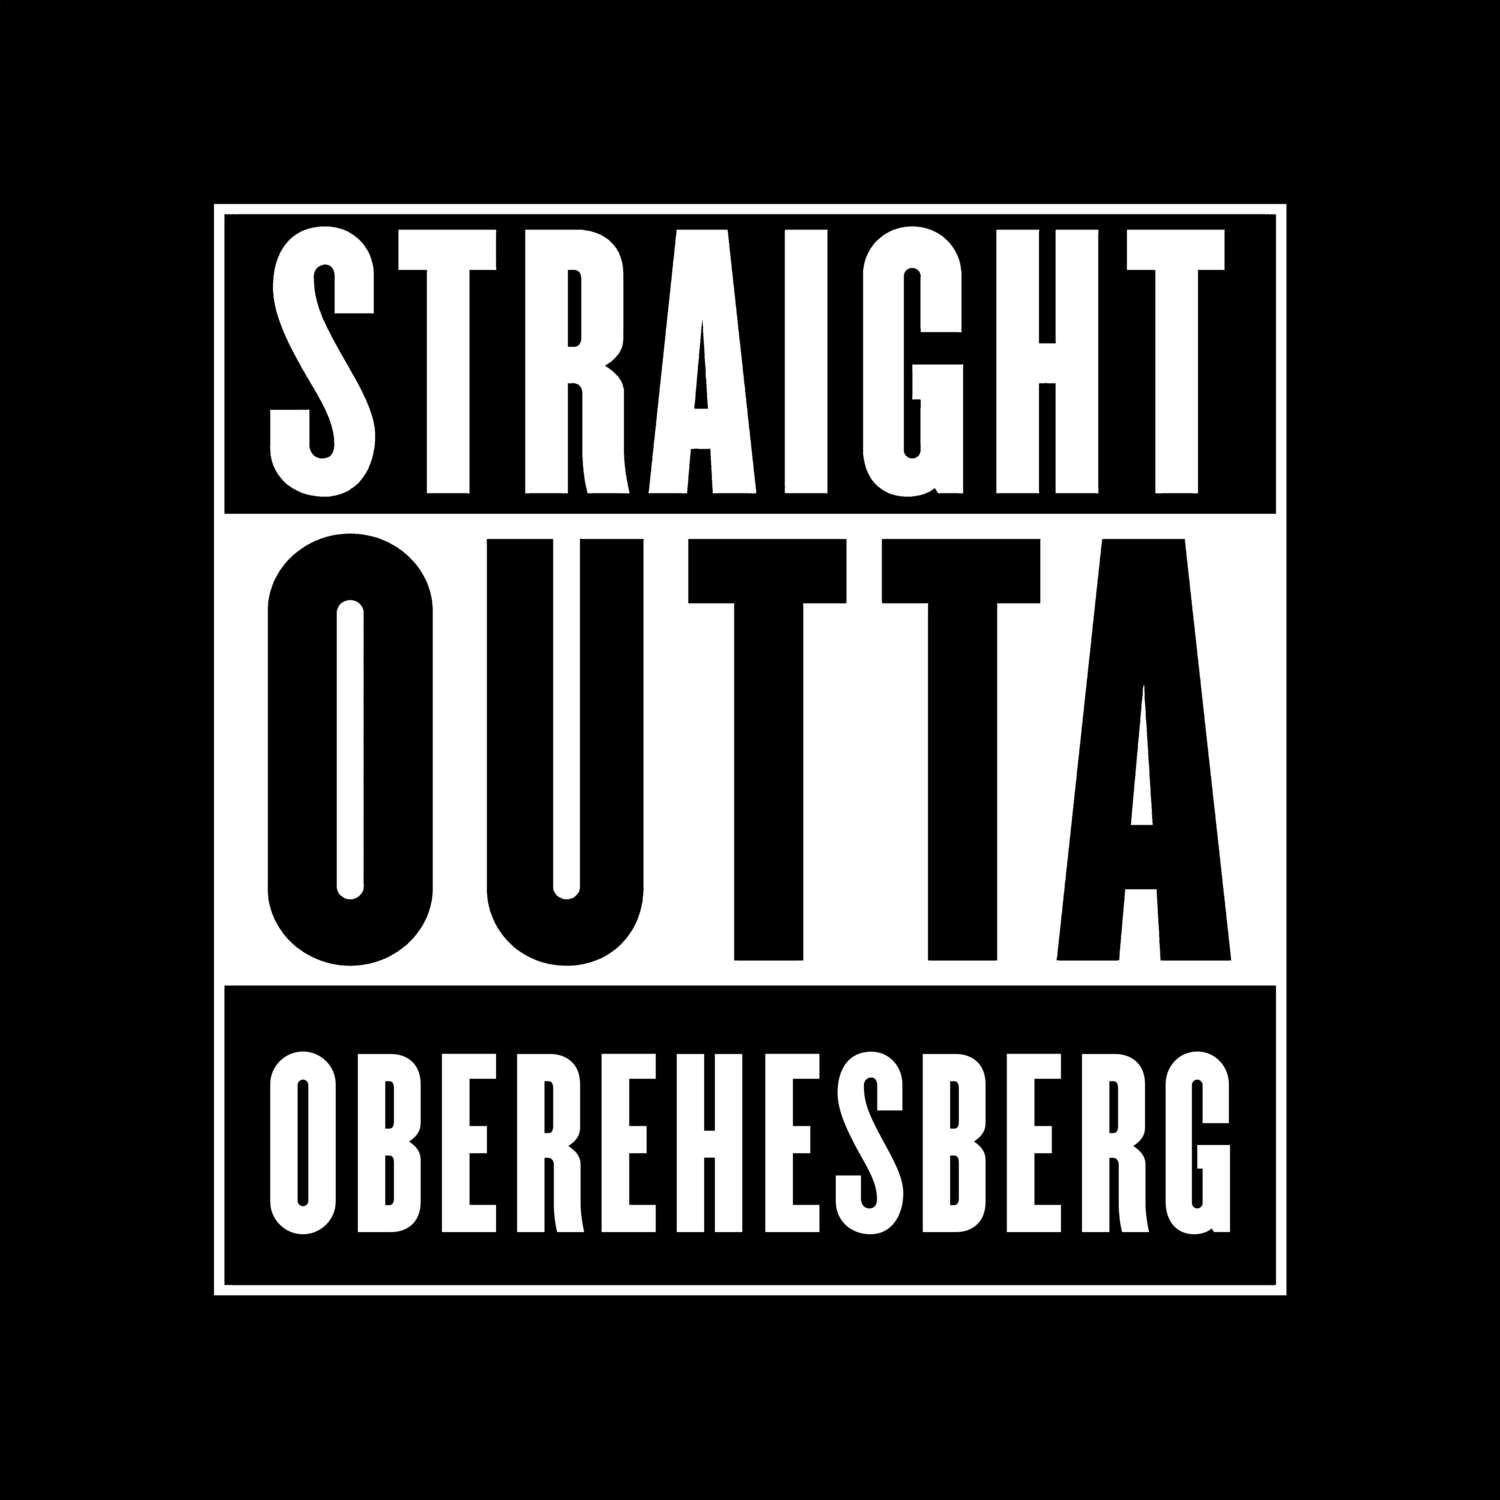 Oberehesberg T-Shirt »Straight Outta«